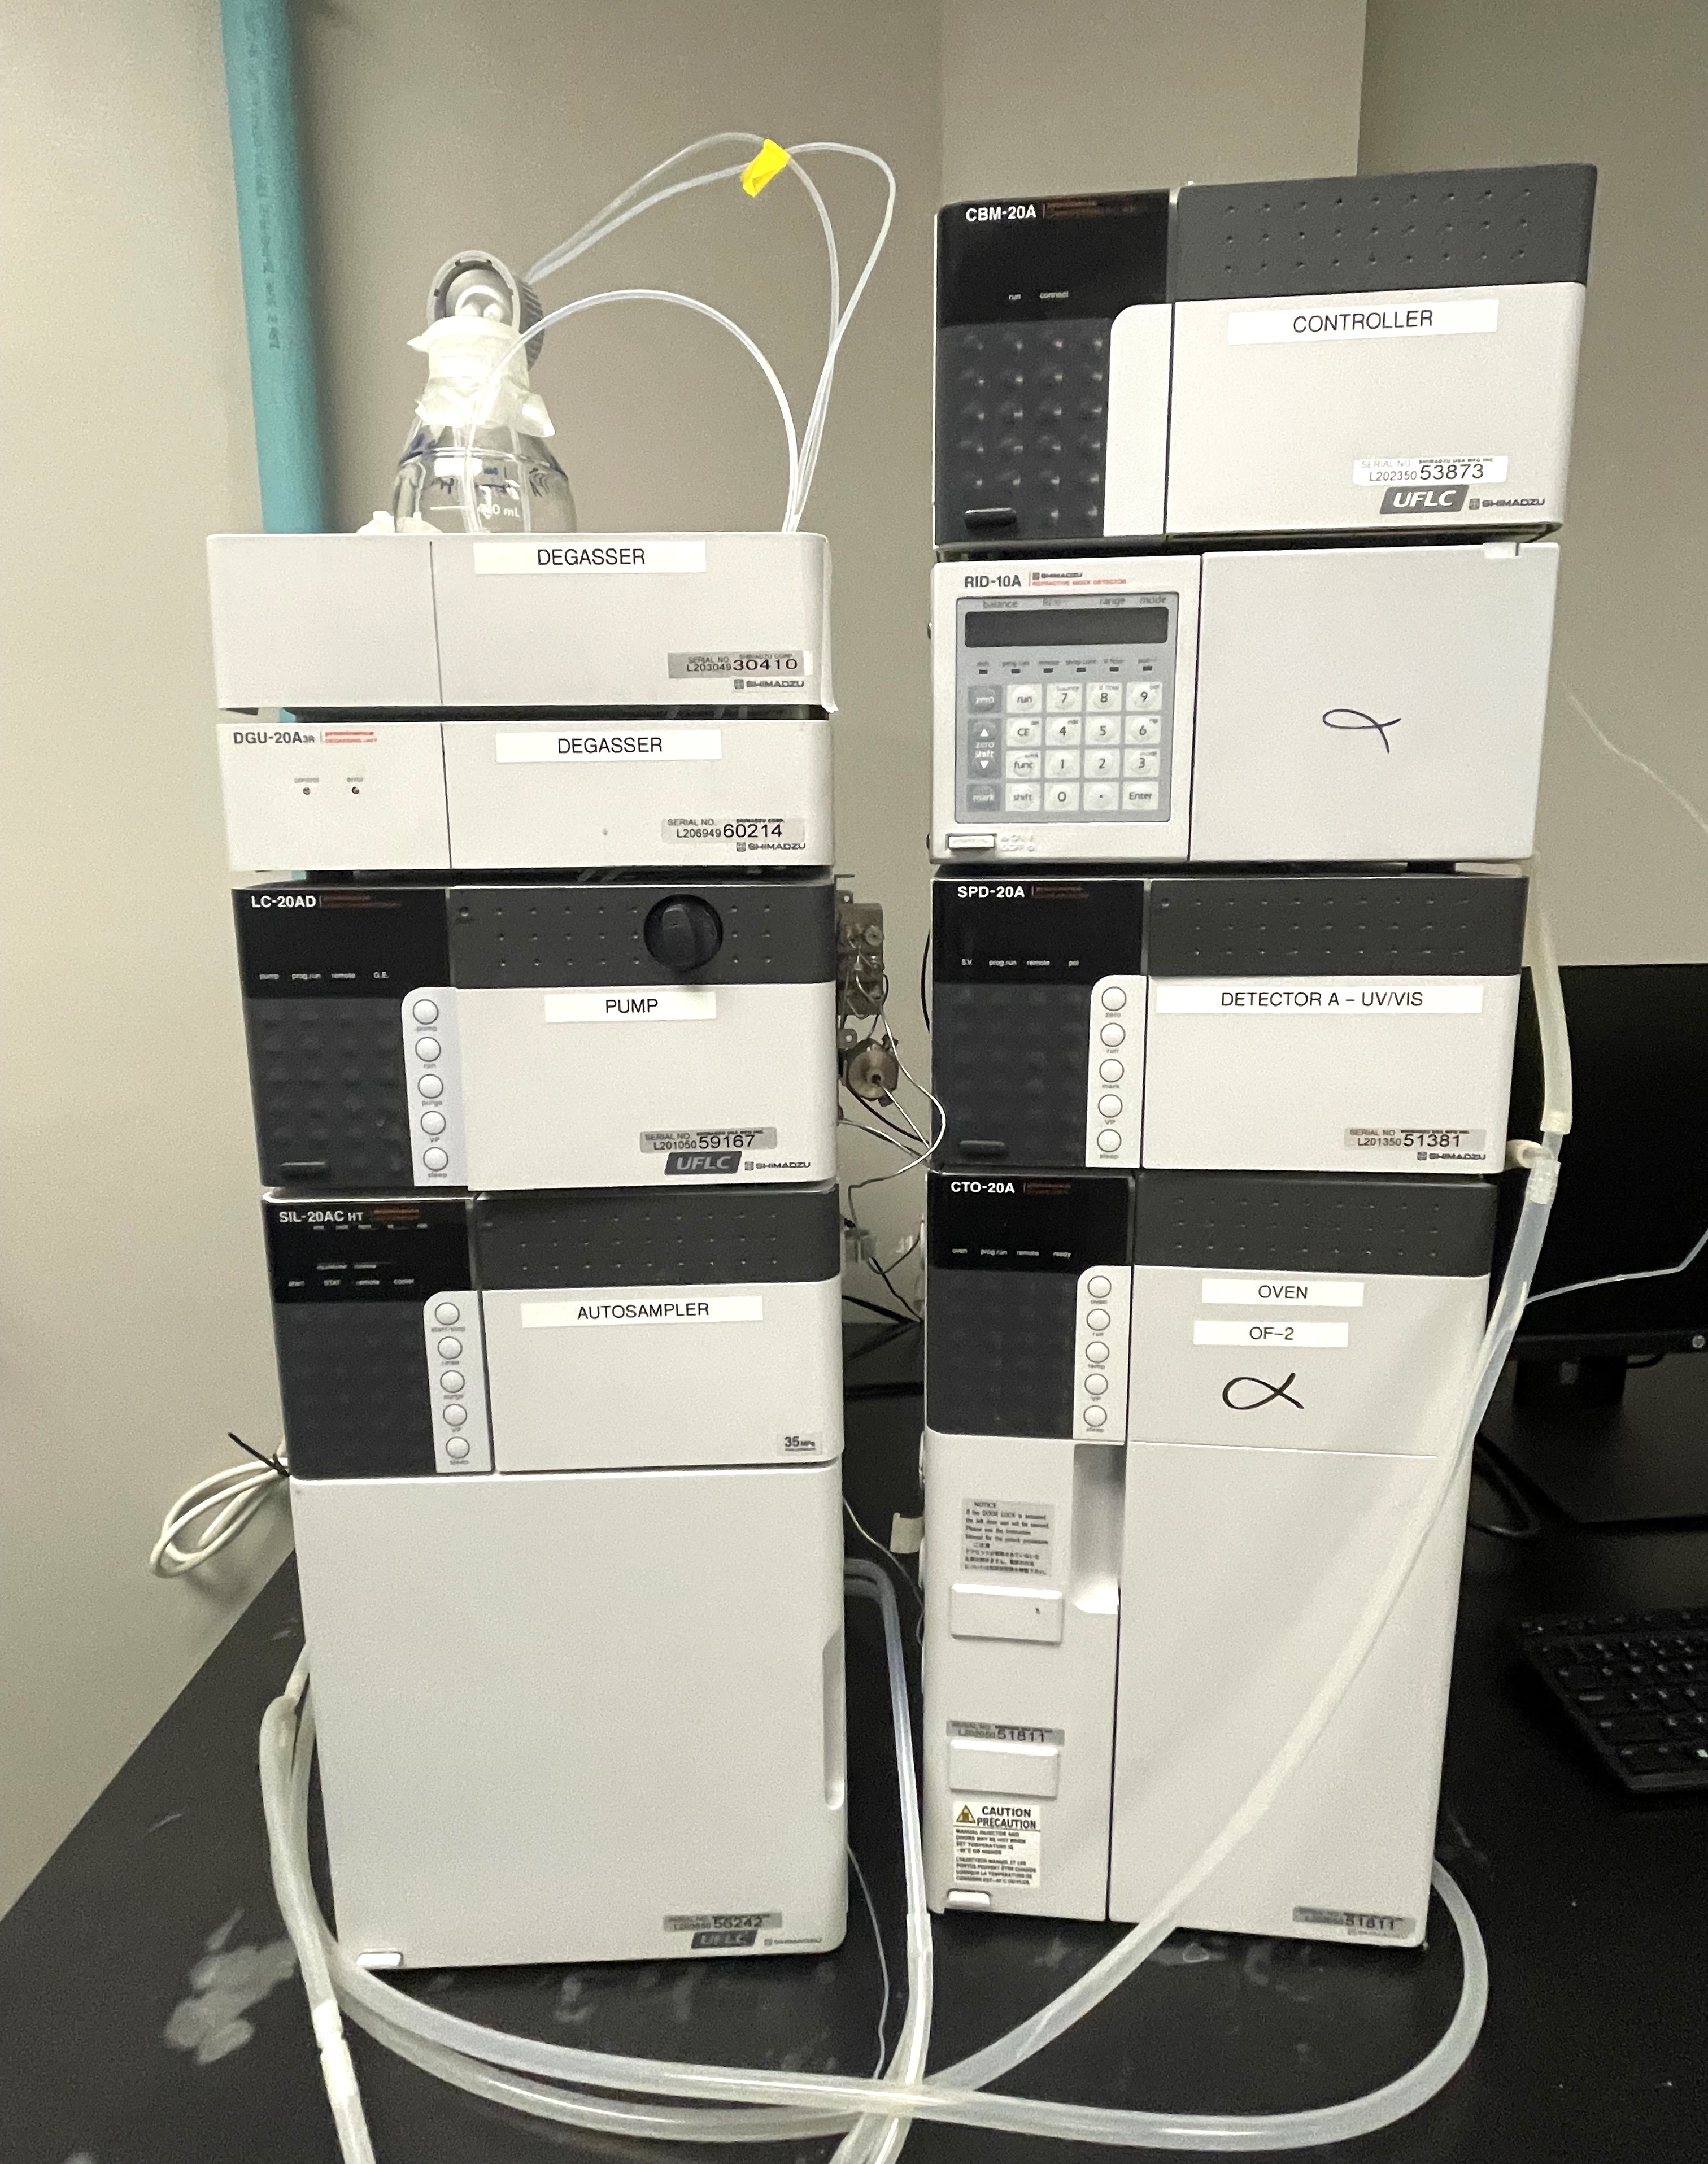 Shimadzu UFPLC System - Still in lab